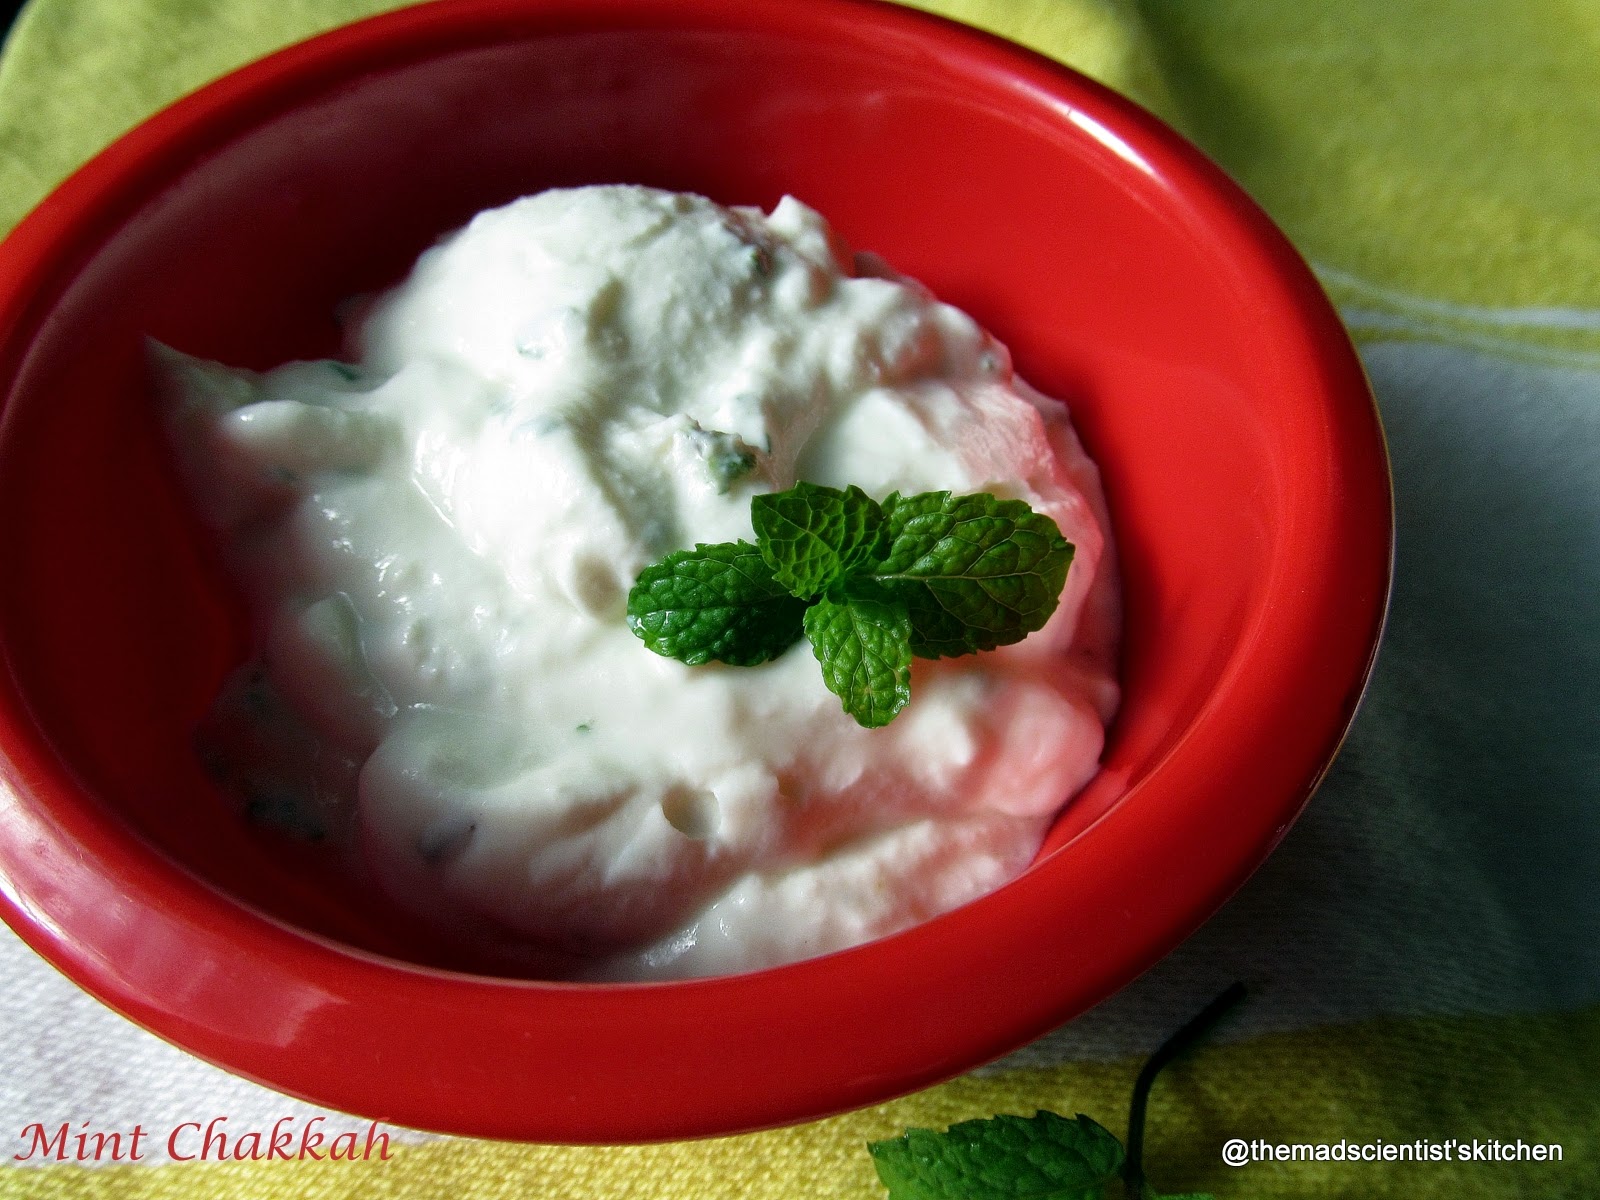 mint chakkah~ a creamy curd and mint dip